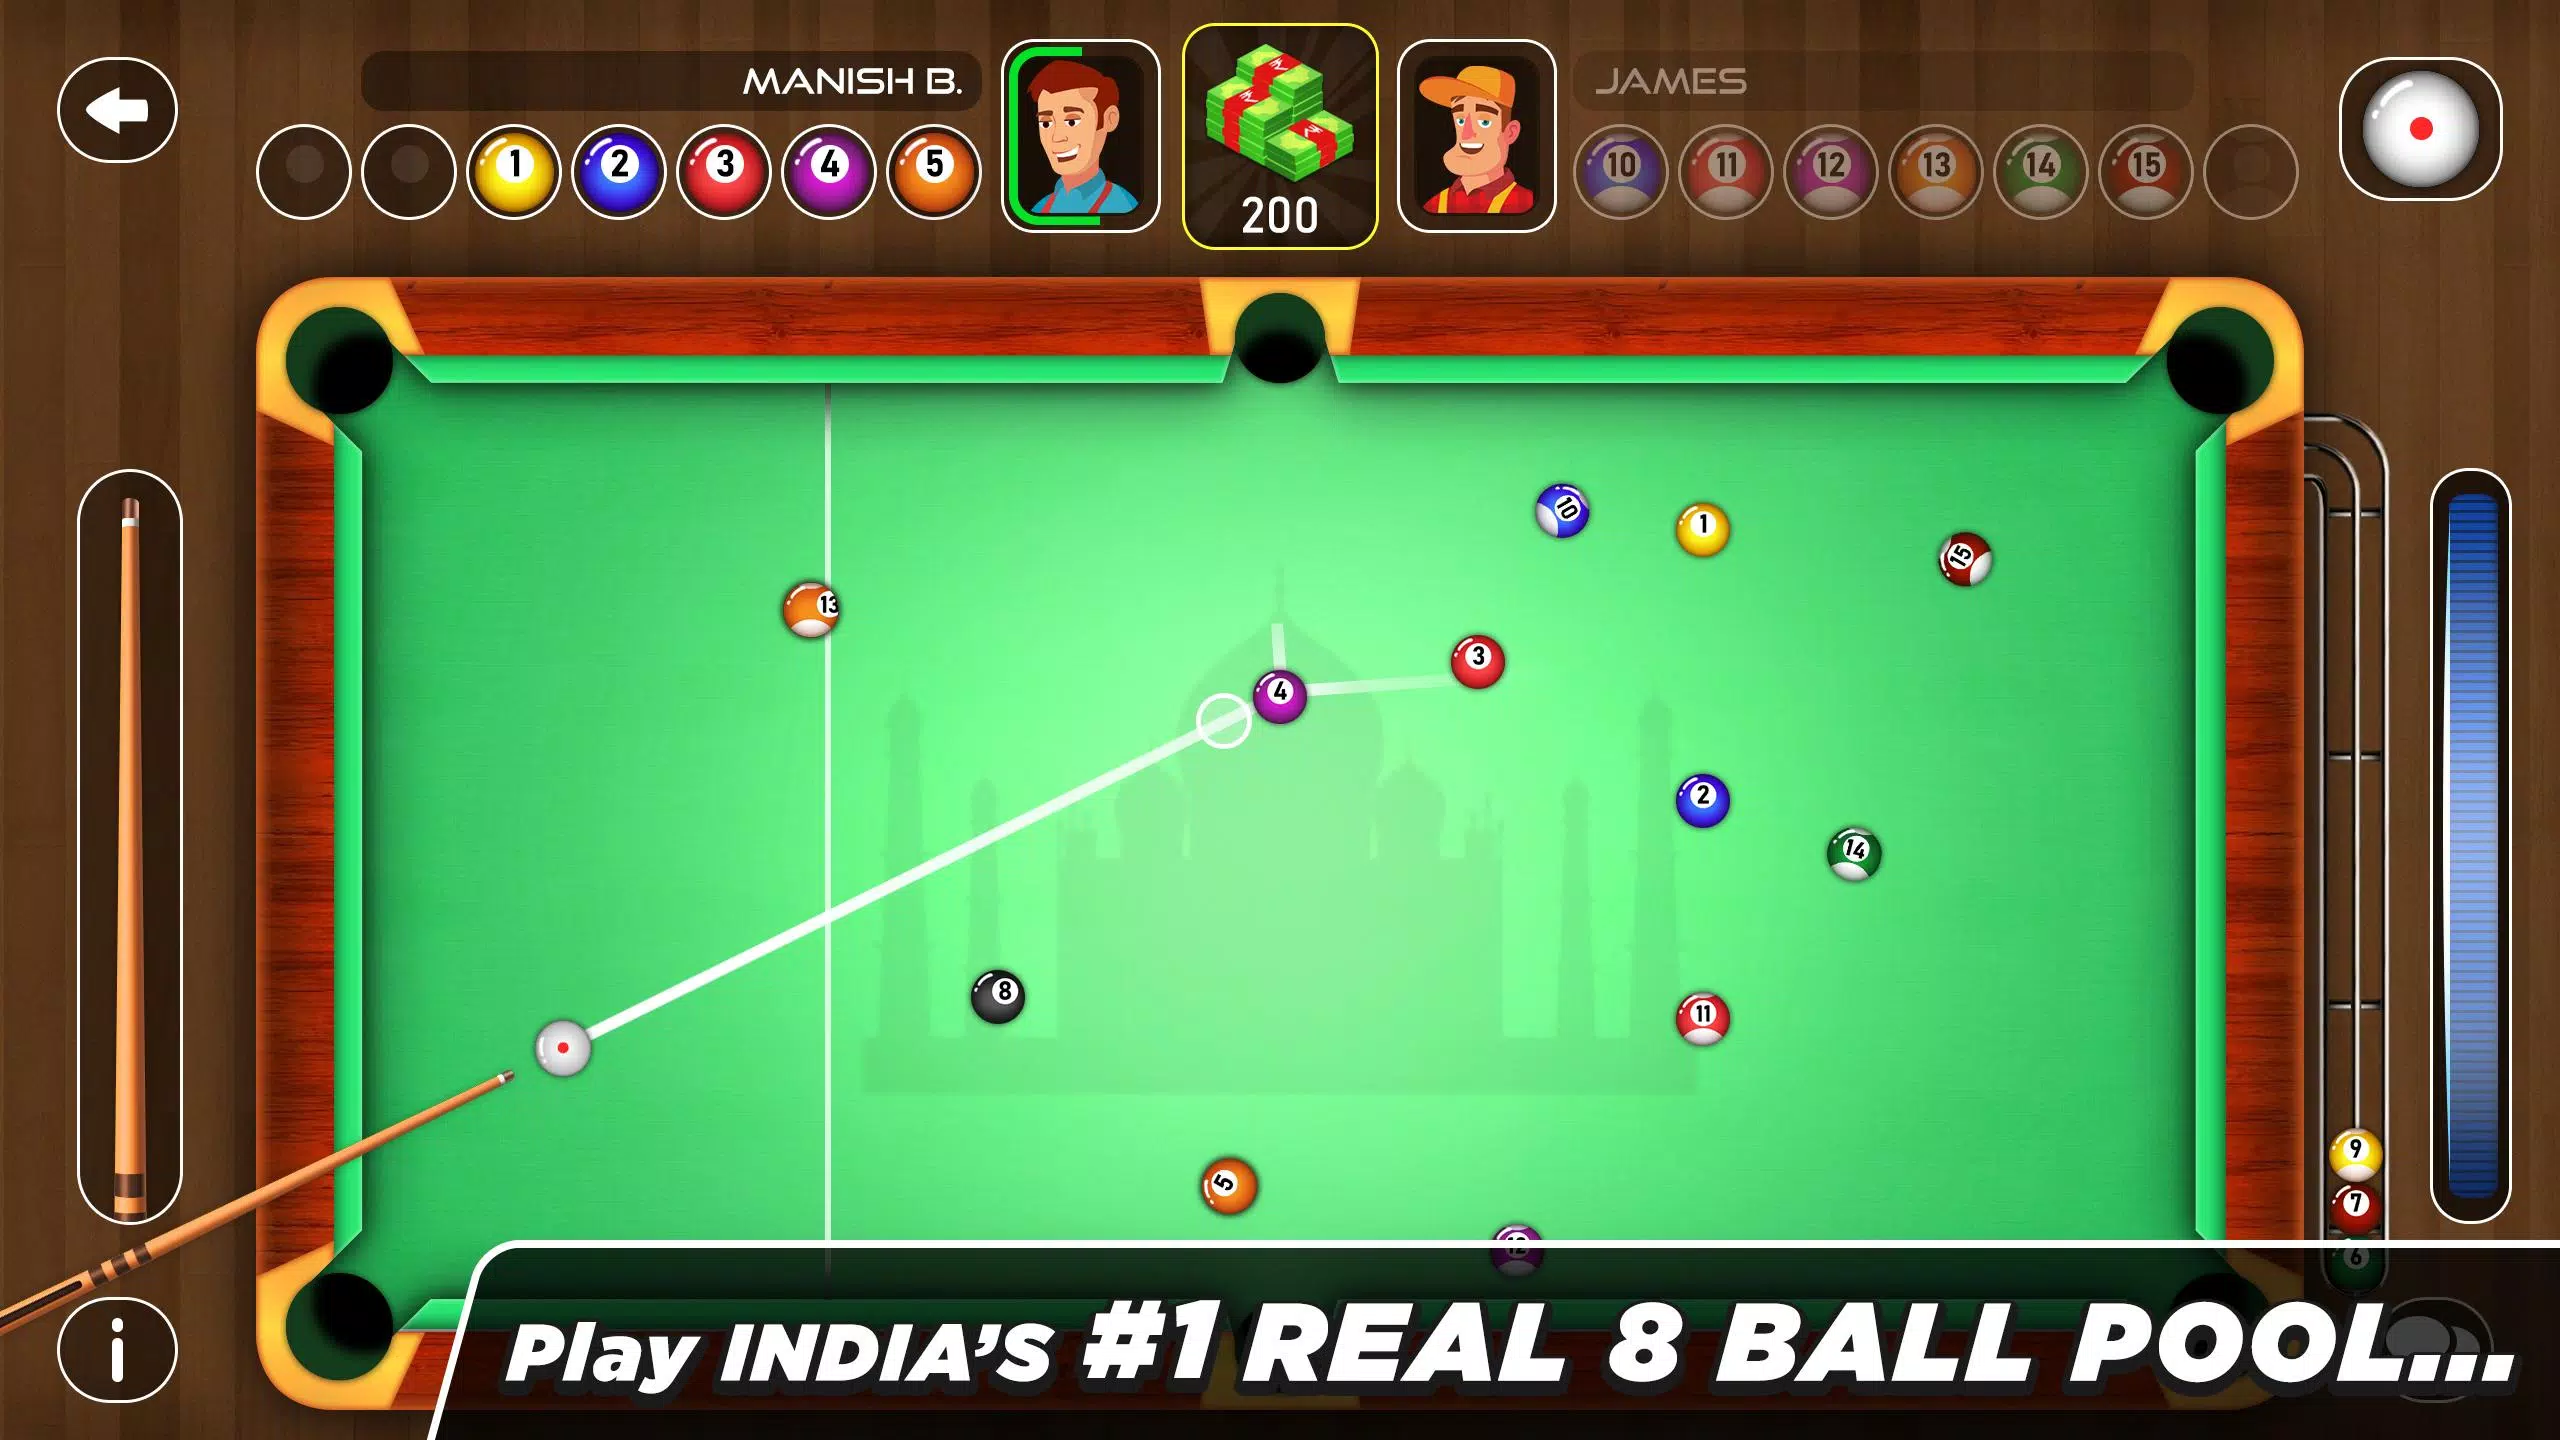 صف دراسي غص سوء الفهم  Real 8 Ball Pool for Android - APK Download